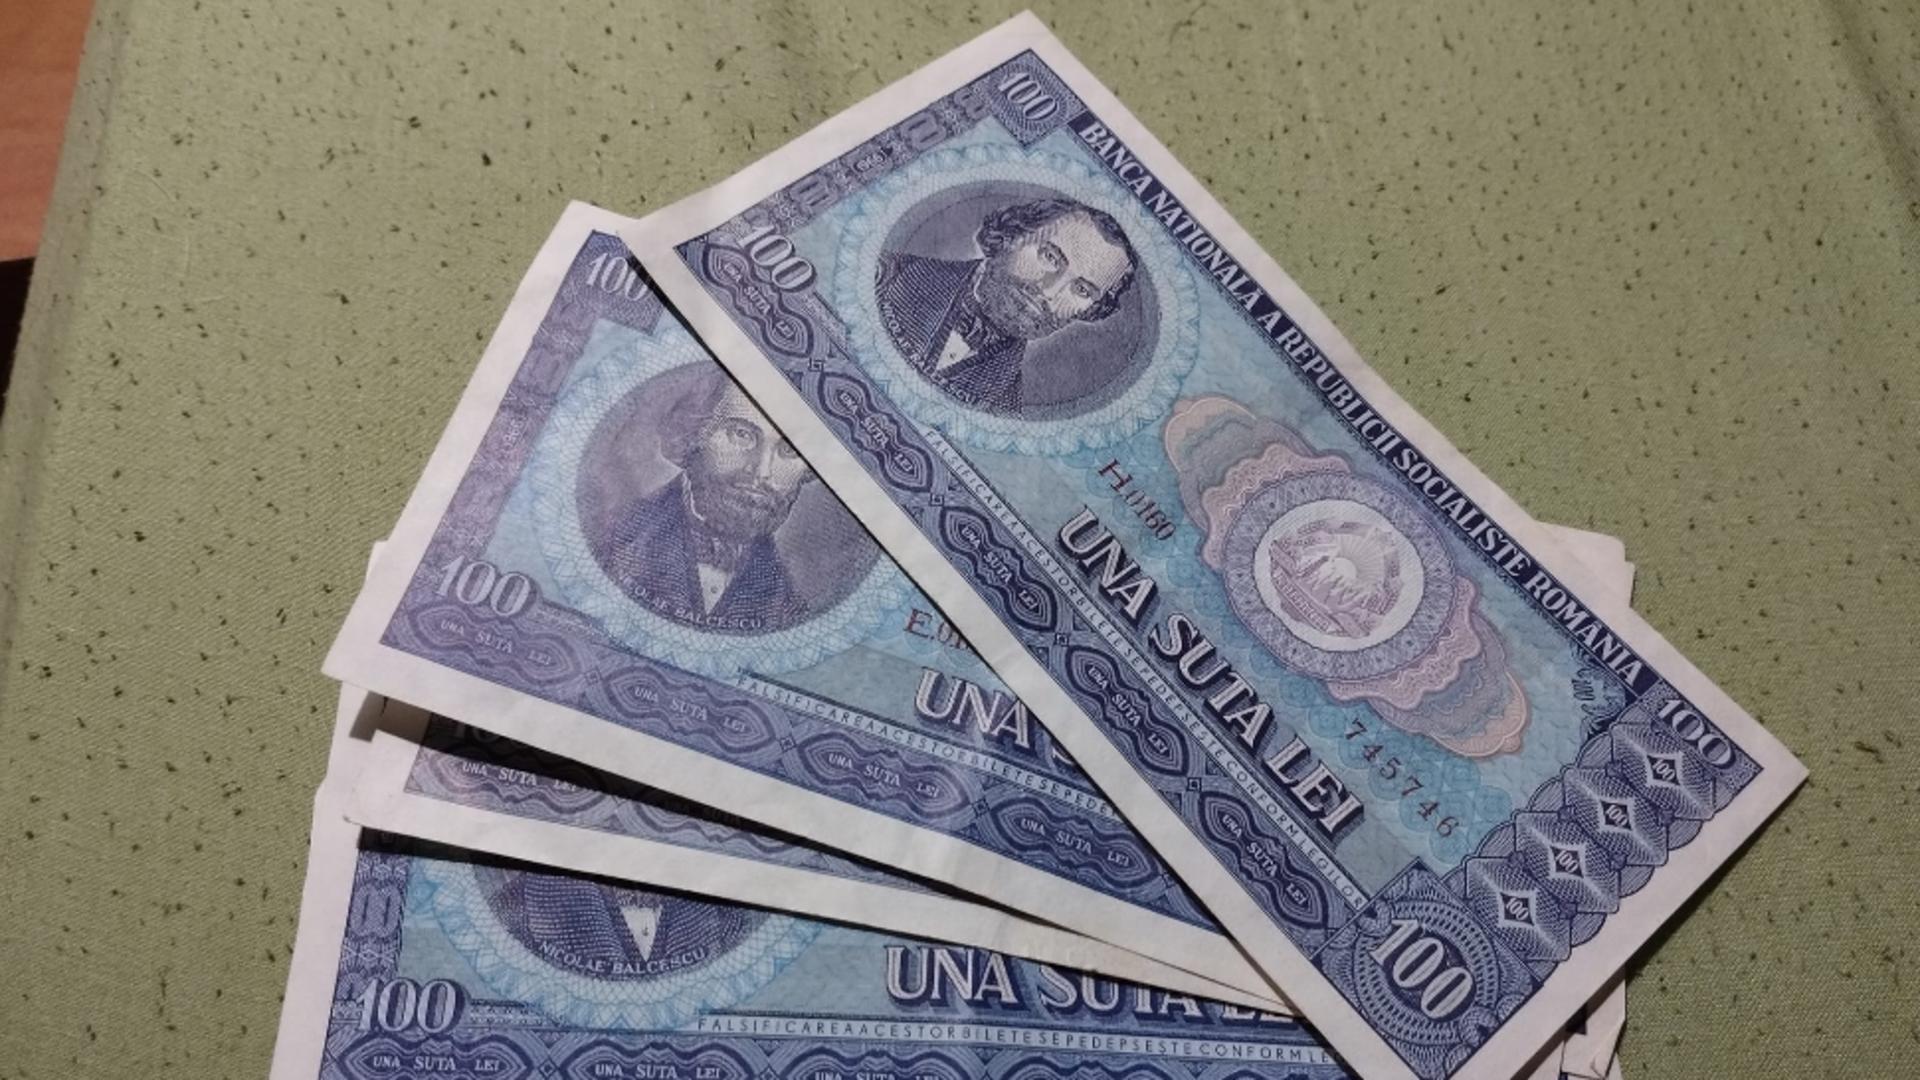 Bancnote de 100 de lei (foto: Daniel Ilea)